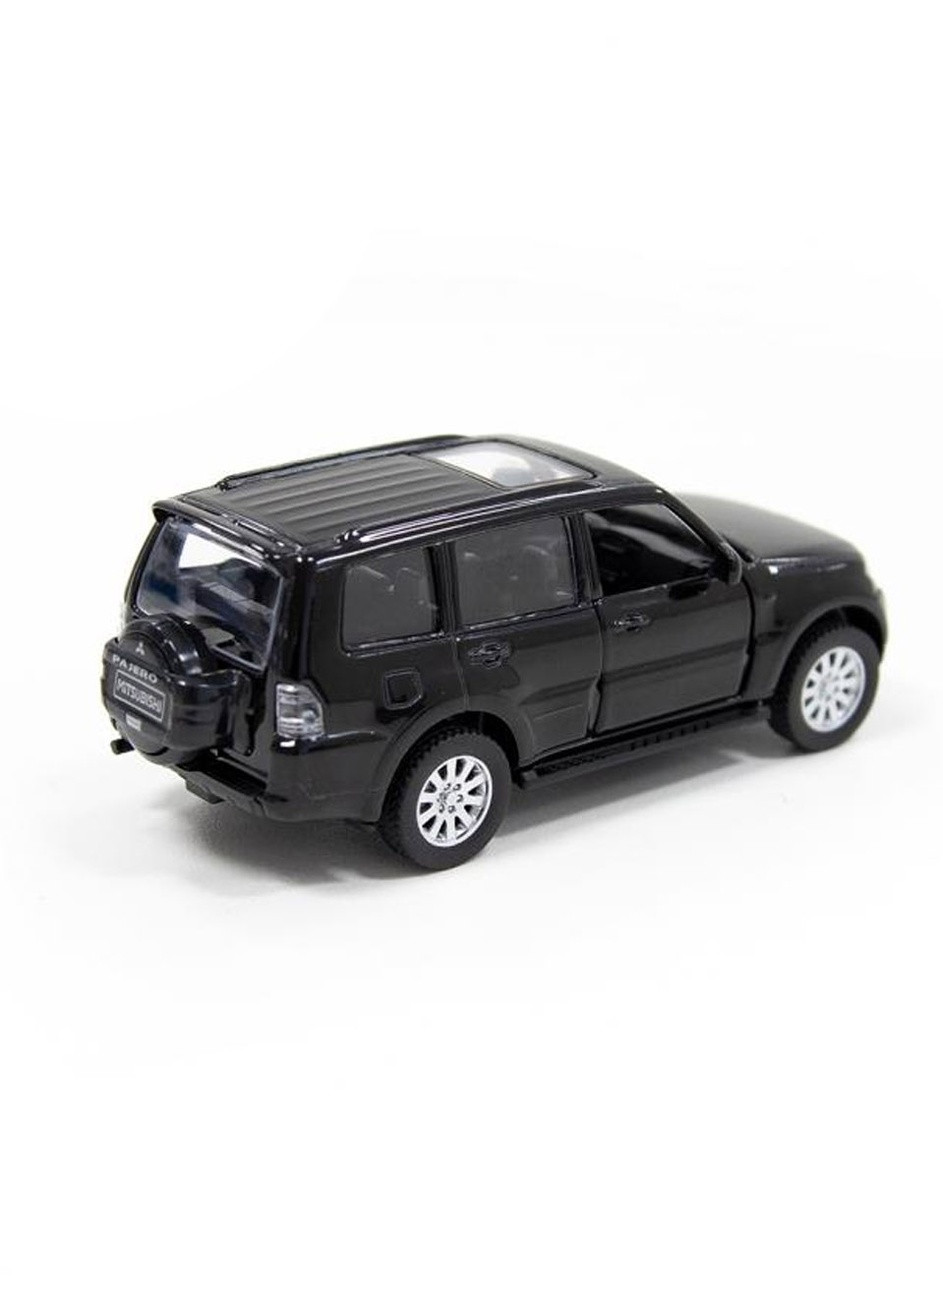 Автомодель - MITSUBISHI PAJERO 4WD TURBO цвет черный ЦБ-00221522 TechnoDrive (259443198)